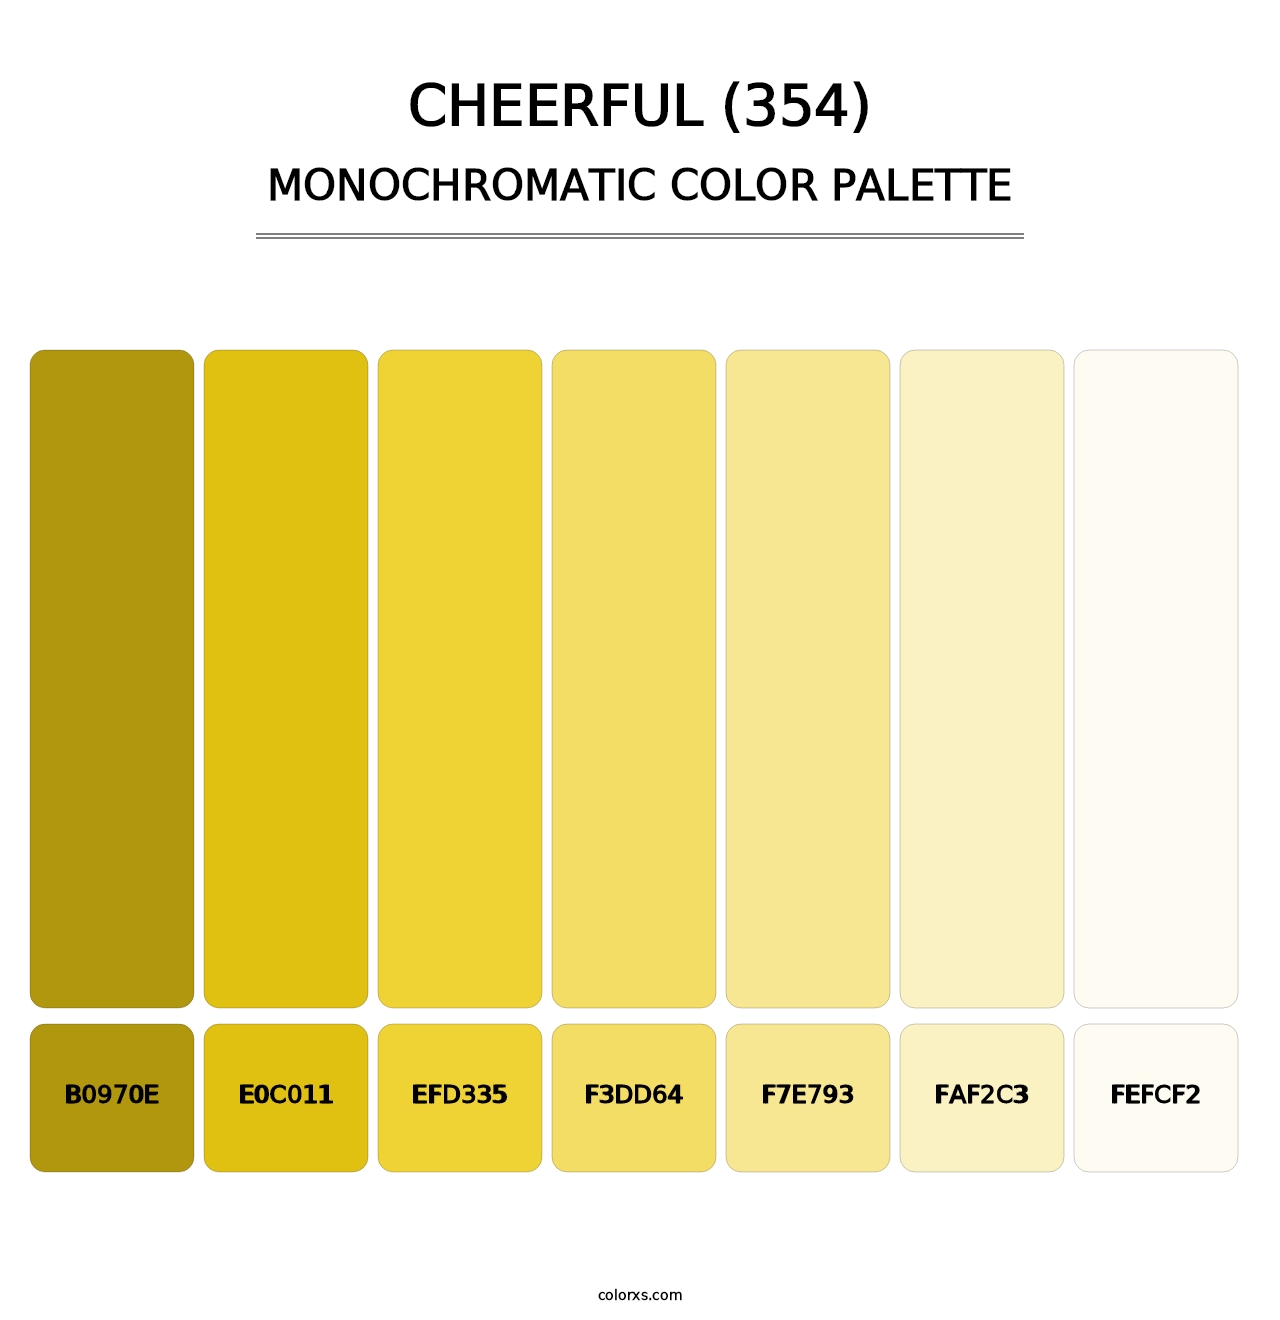 Cheerful (354) - Monochromatic Color Palette